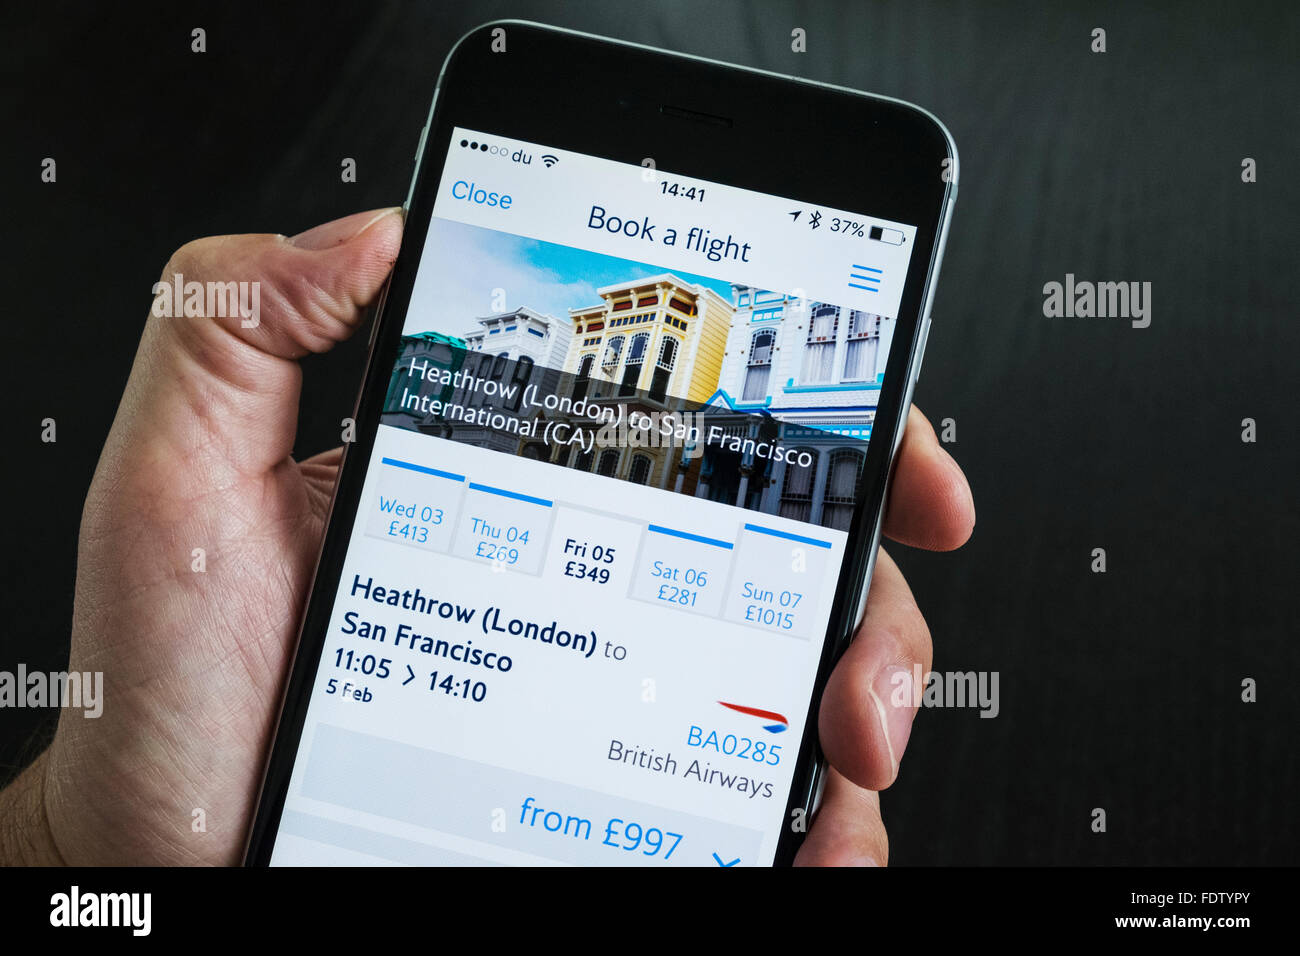 British Airways flight booking app on an iPhone 6 Plus smart phone Stock Photo